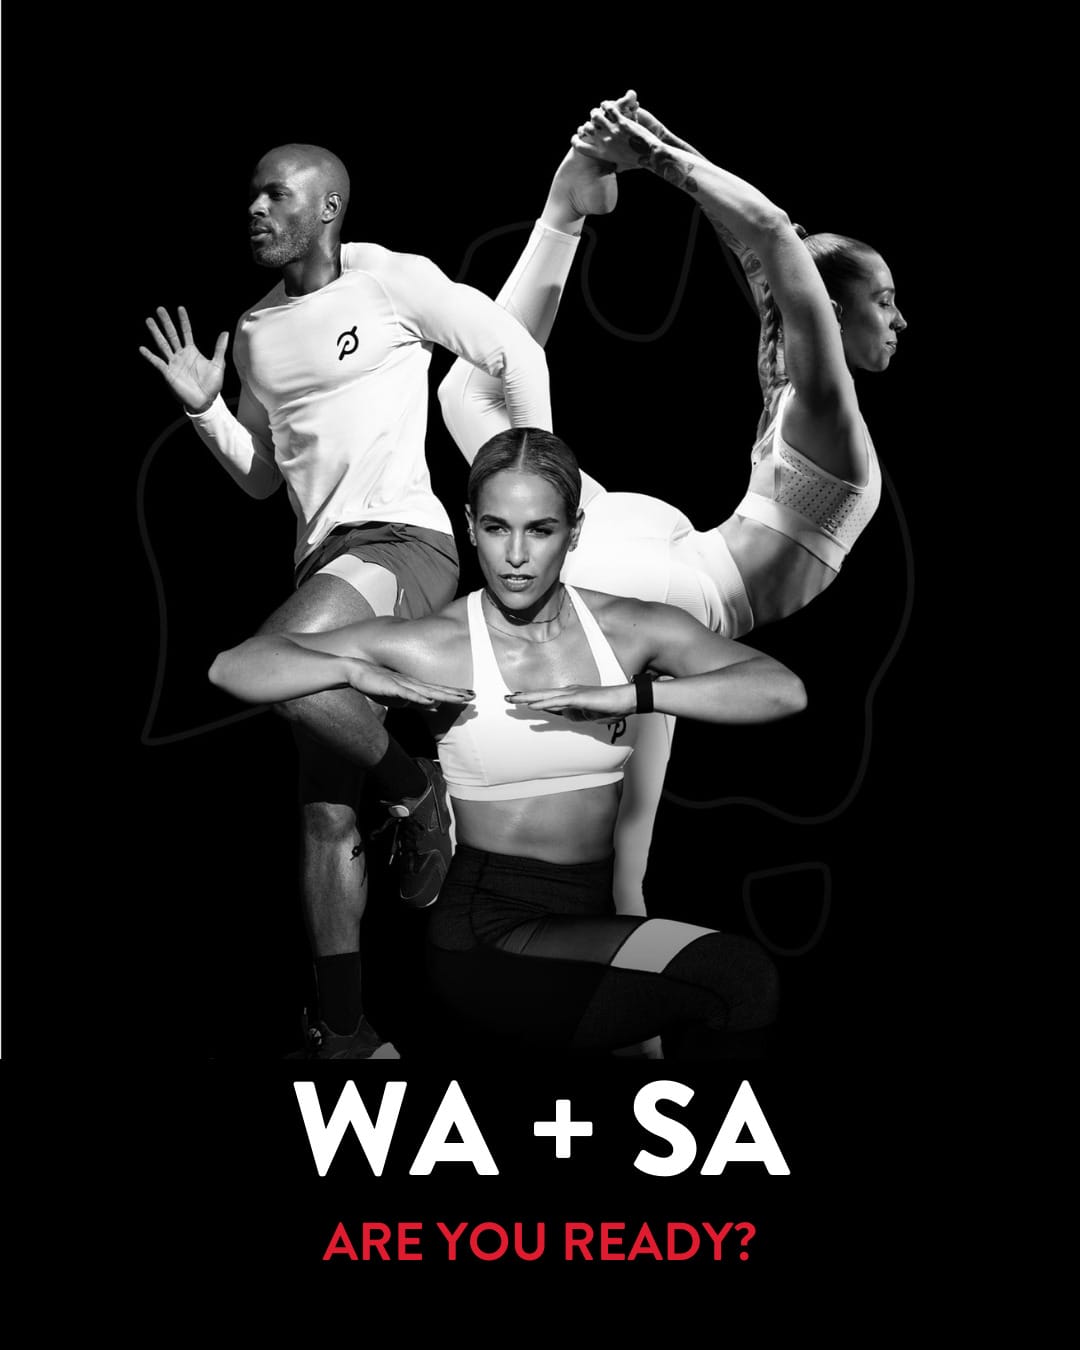 WA + SA: Are You Ready? Image credit Peloton social media.